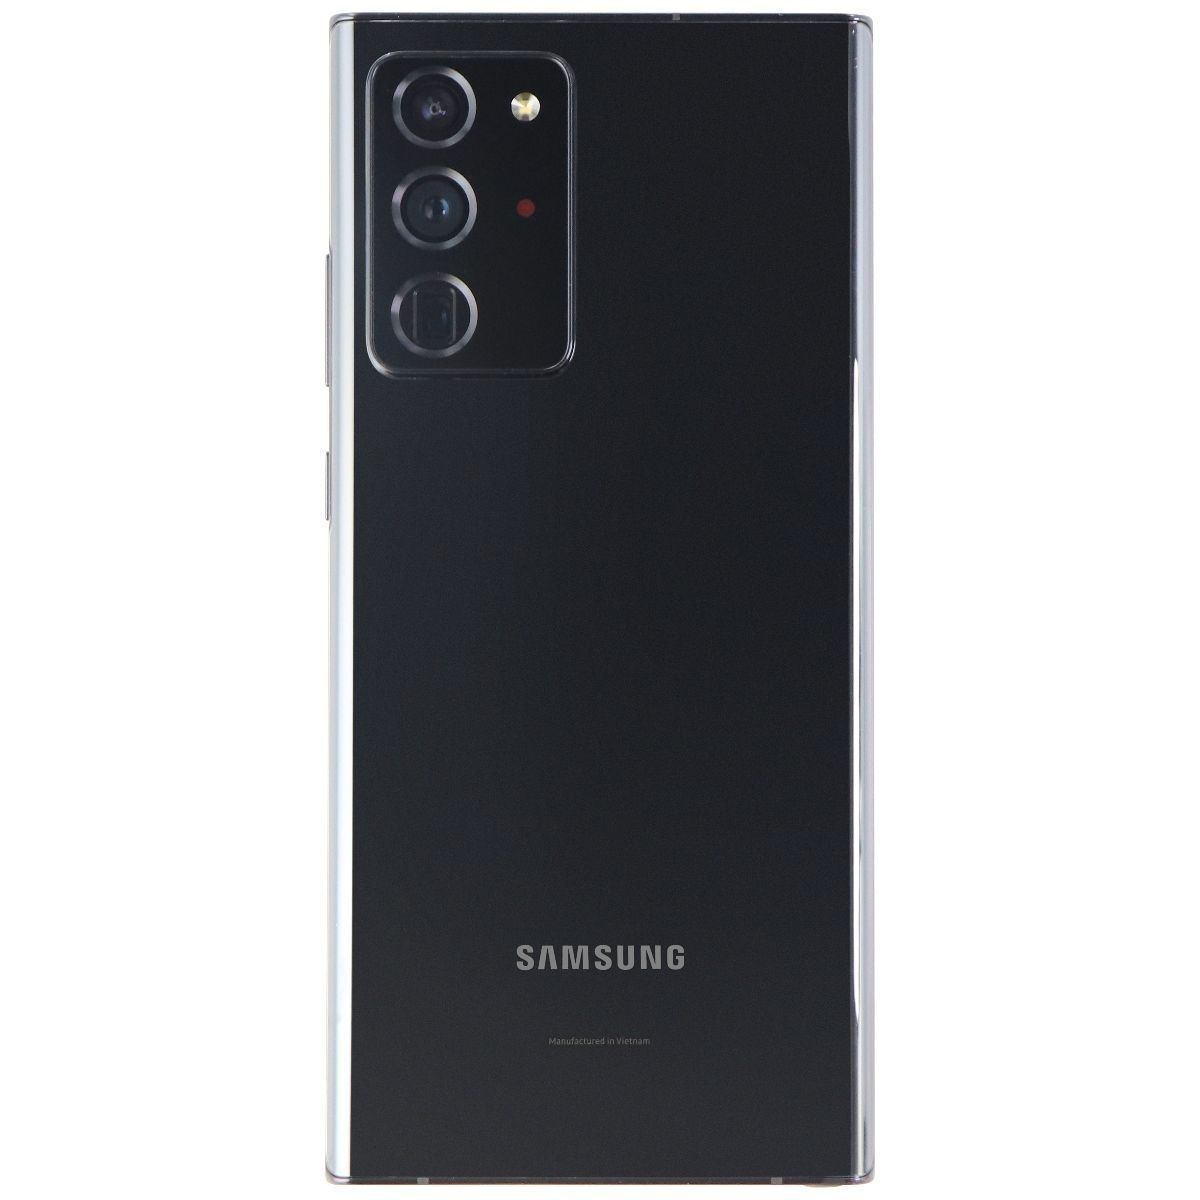 Samsung Galaxy Note20 Ultra 5G (6.9-in) (SM-N986U1) Unlocked - Black/128GB Cell Phones & Smartphones Samsung    - Simple Cell Bulk Wholesale Pricing - USA Seller